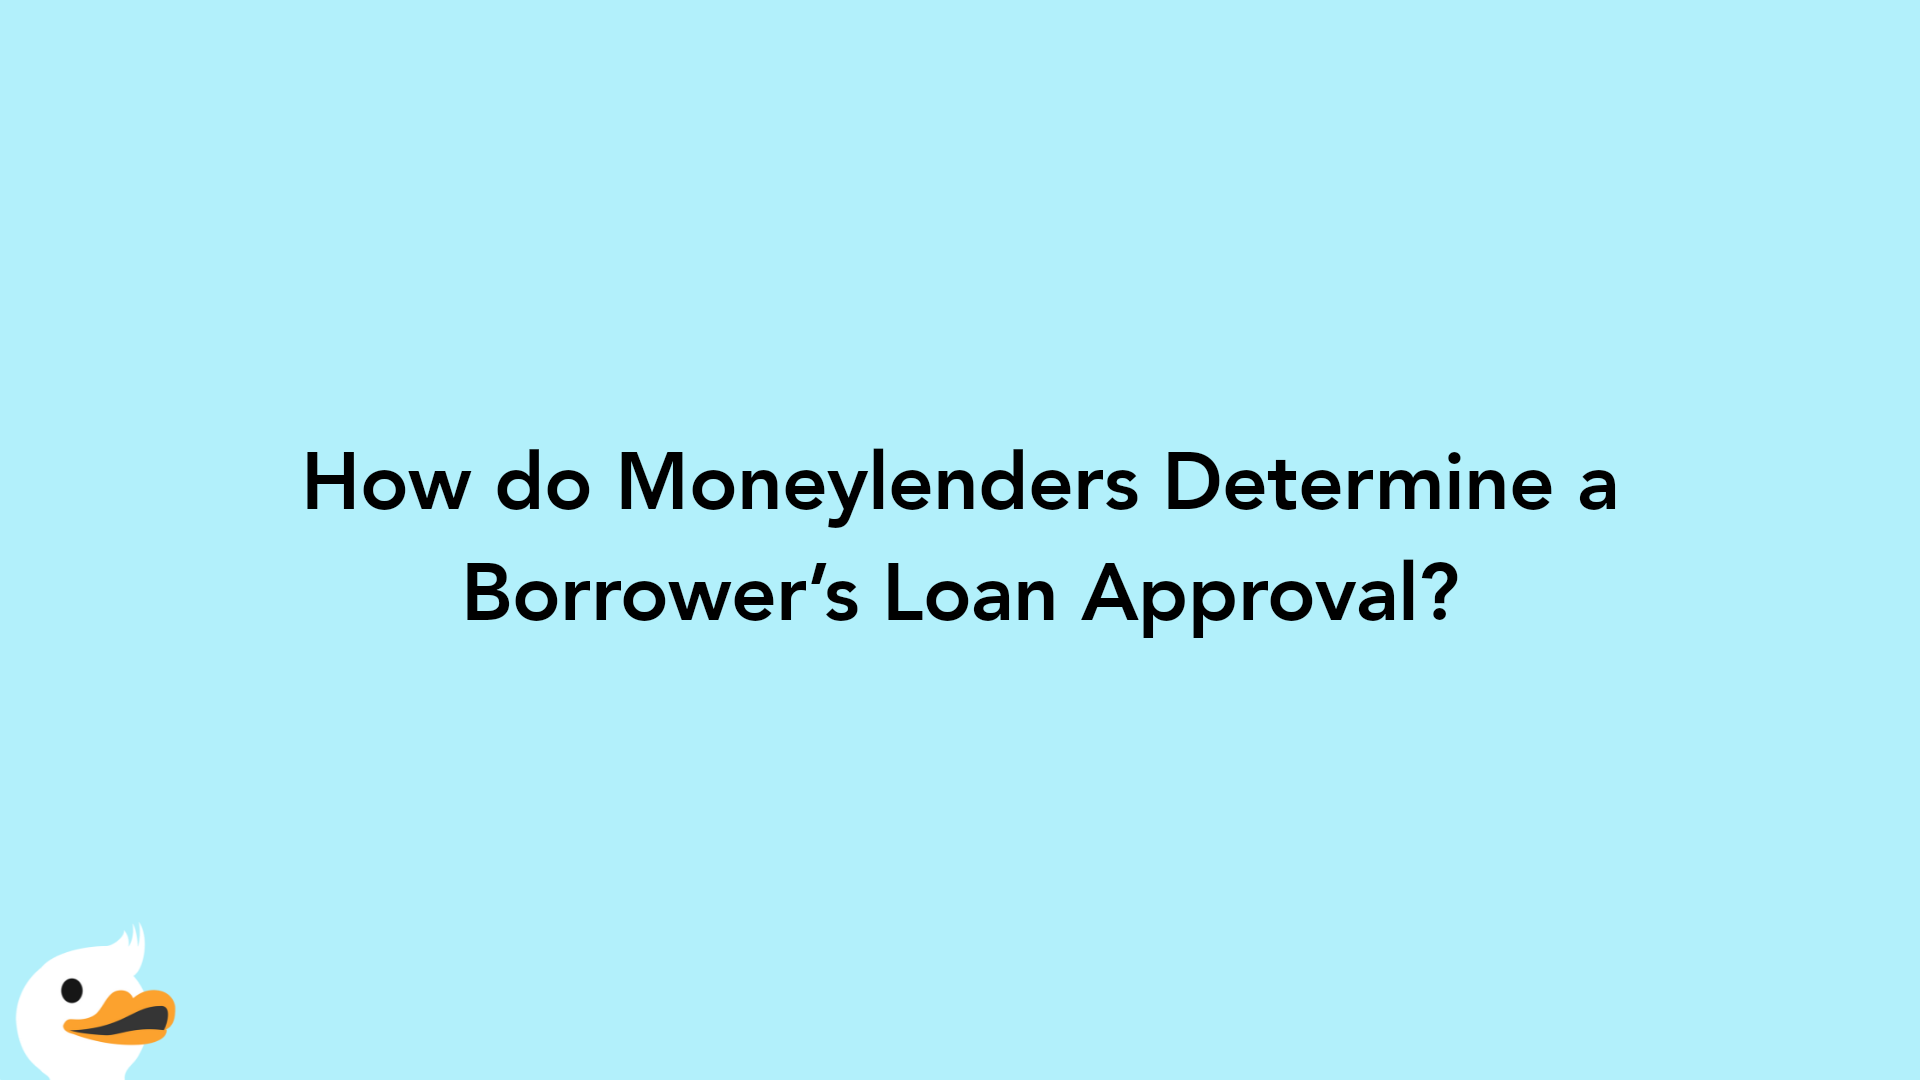 How do Moneylenders Determine a Borrower’s Loan Approval?